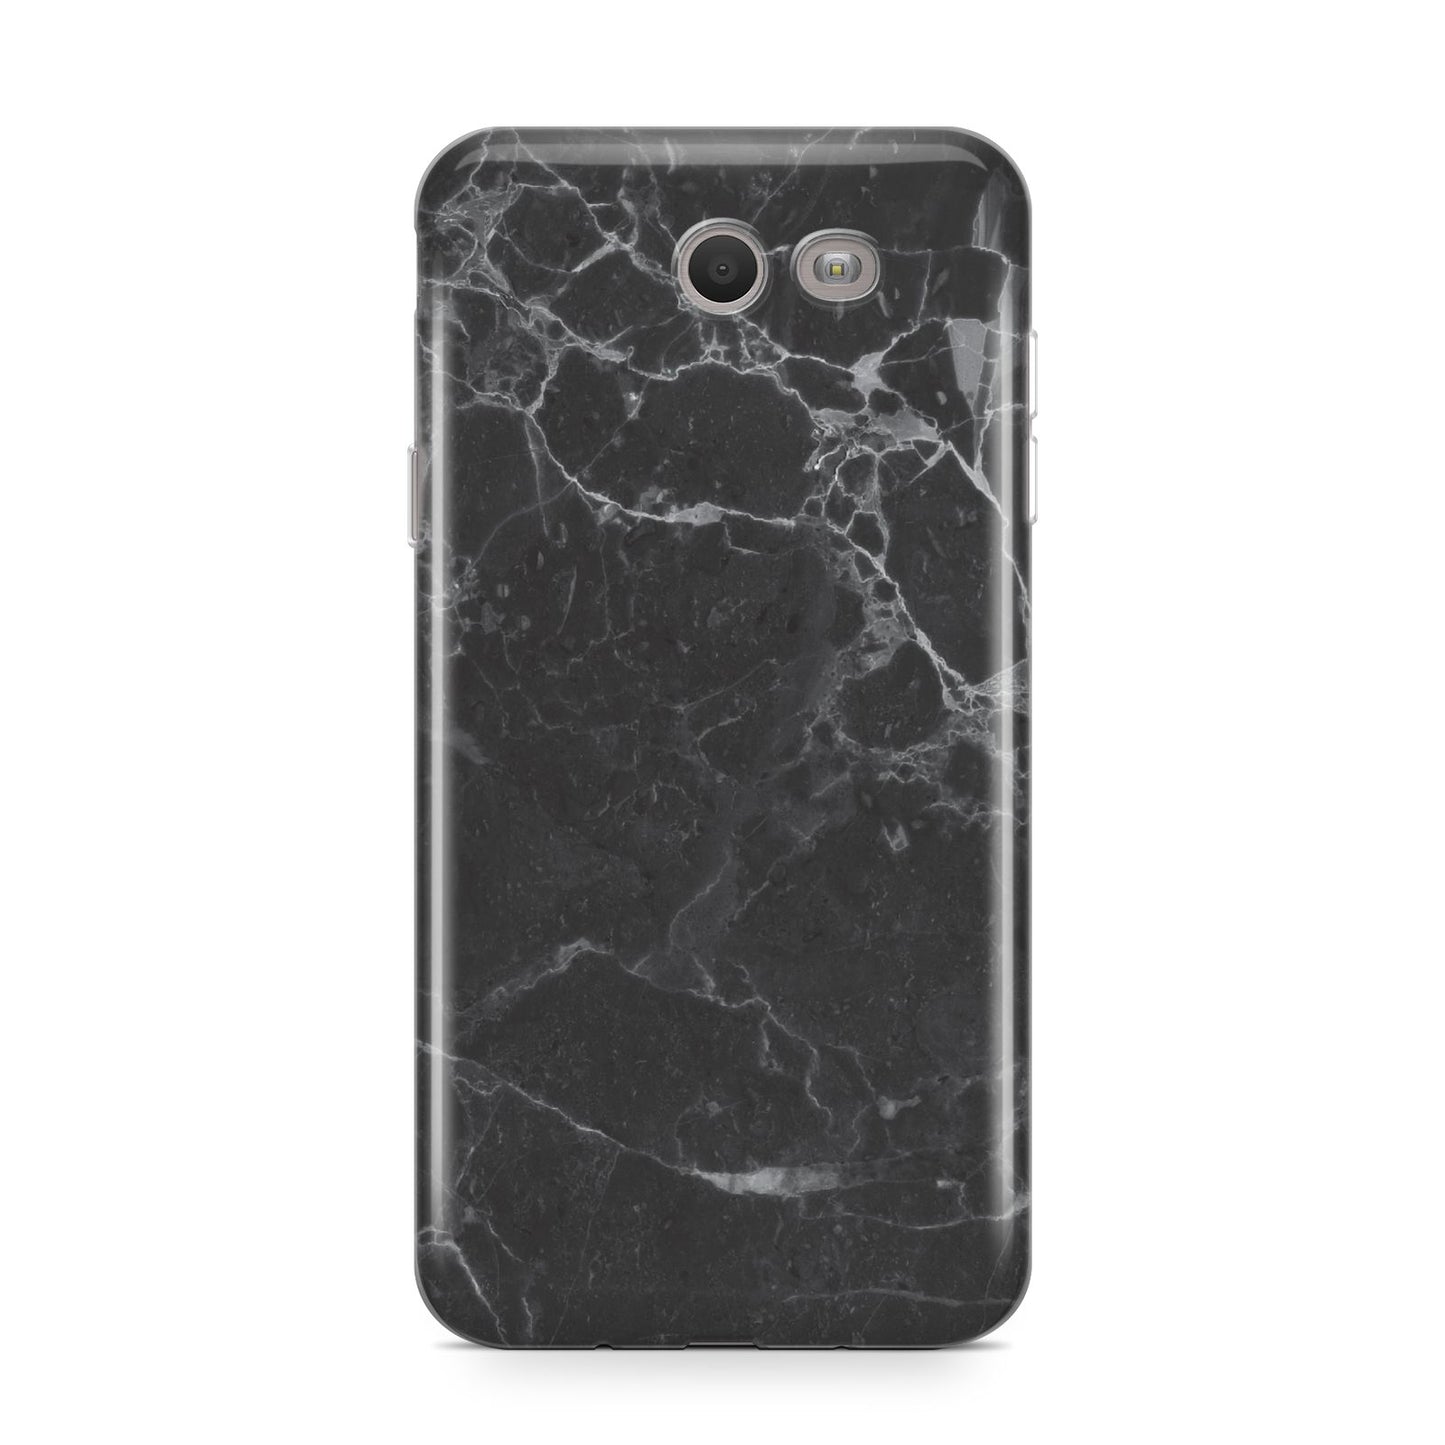 Faux Marble Effect Black Samsung Galaxy J7 2017 Case